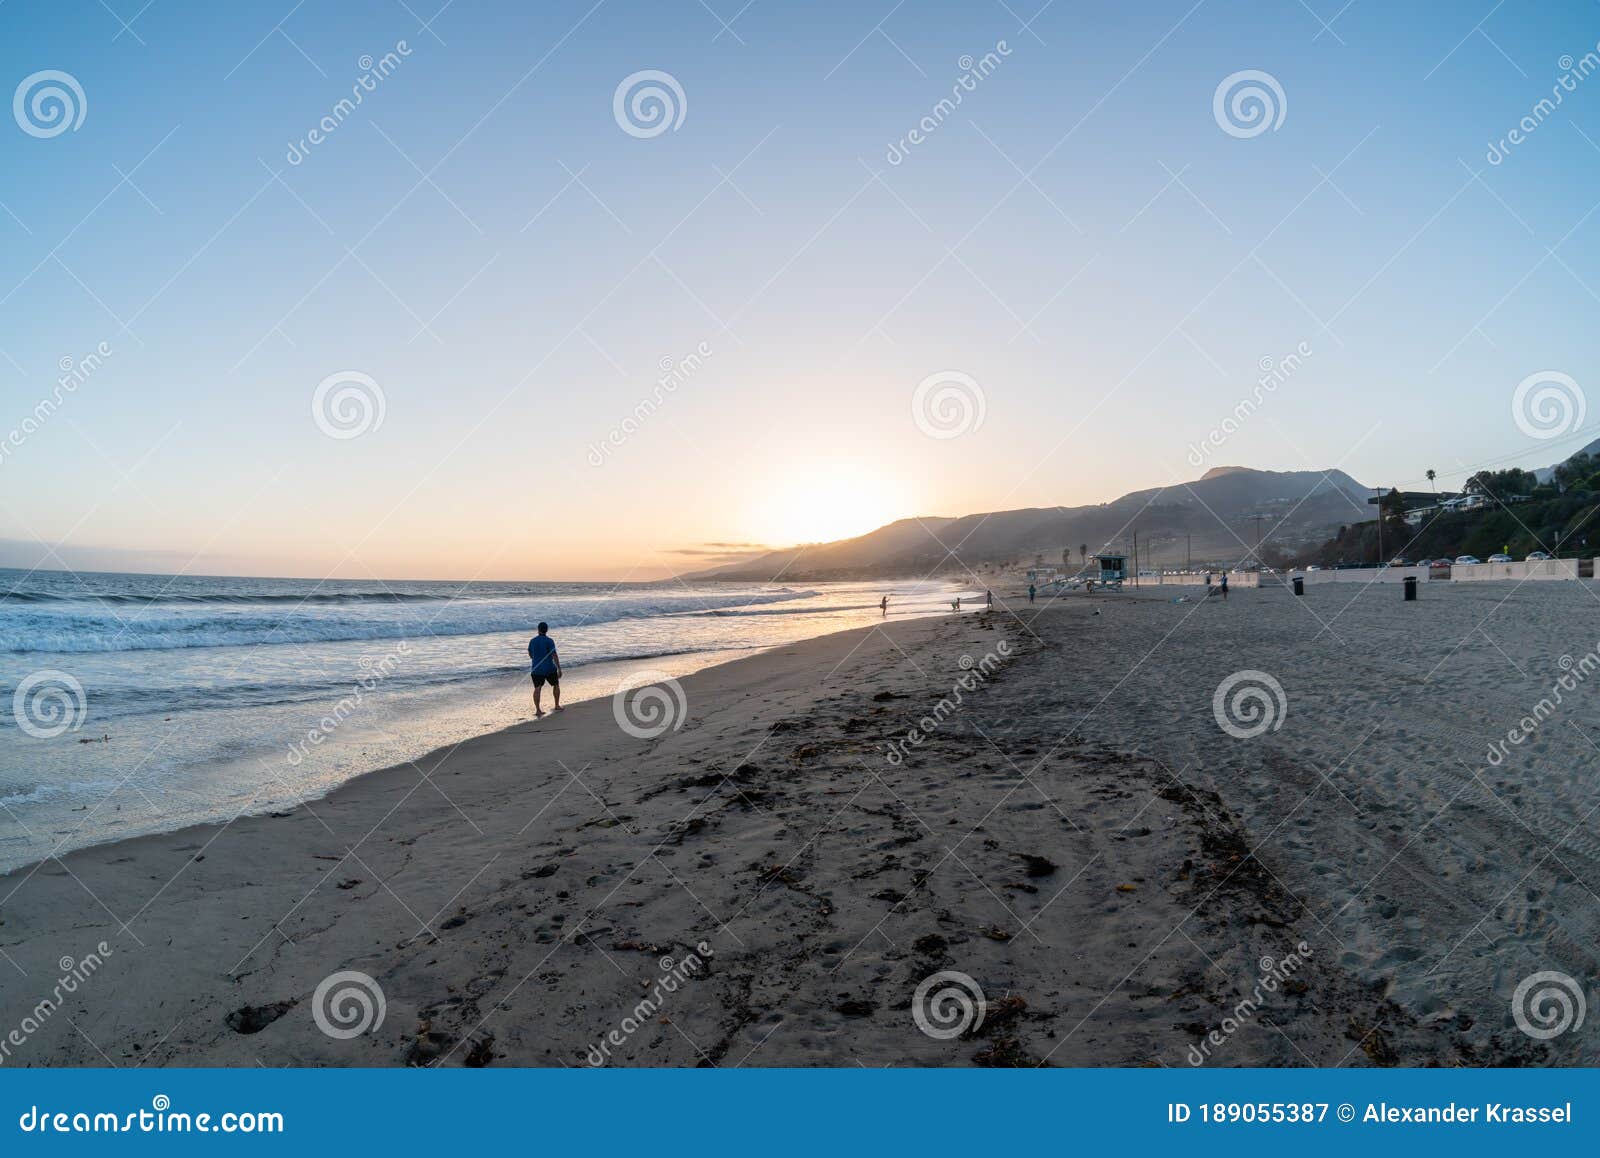 scenic panoramic zuma beach vista at sunset, malibu,california